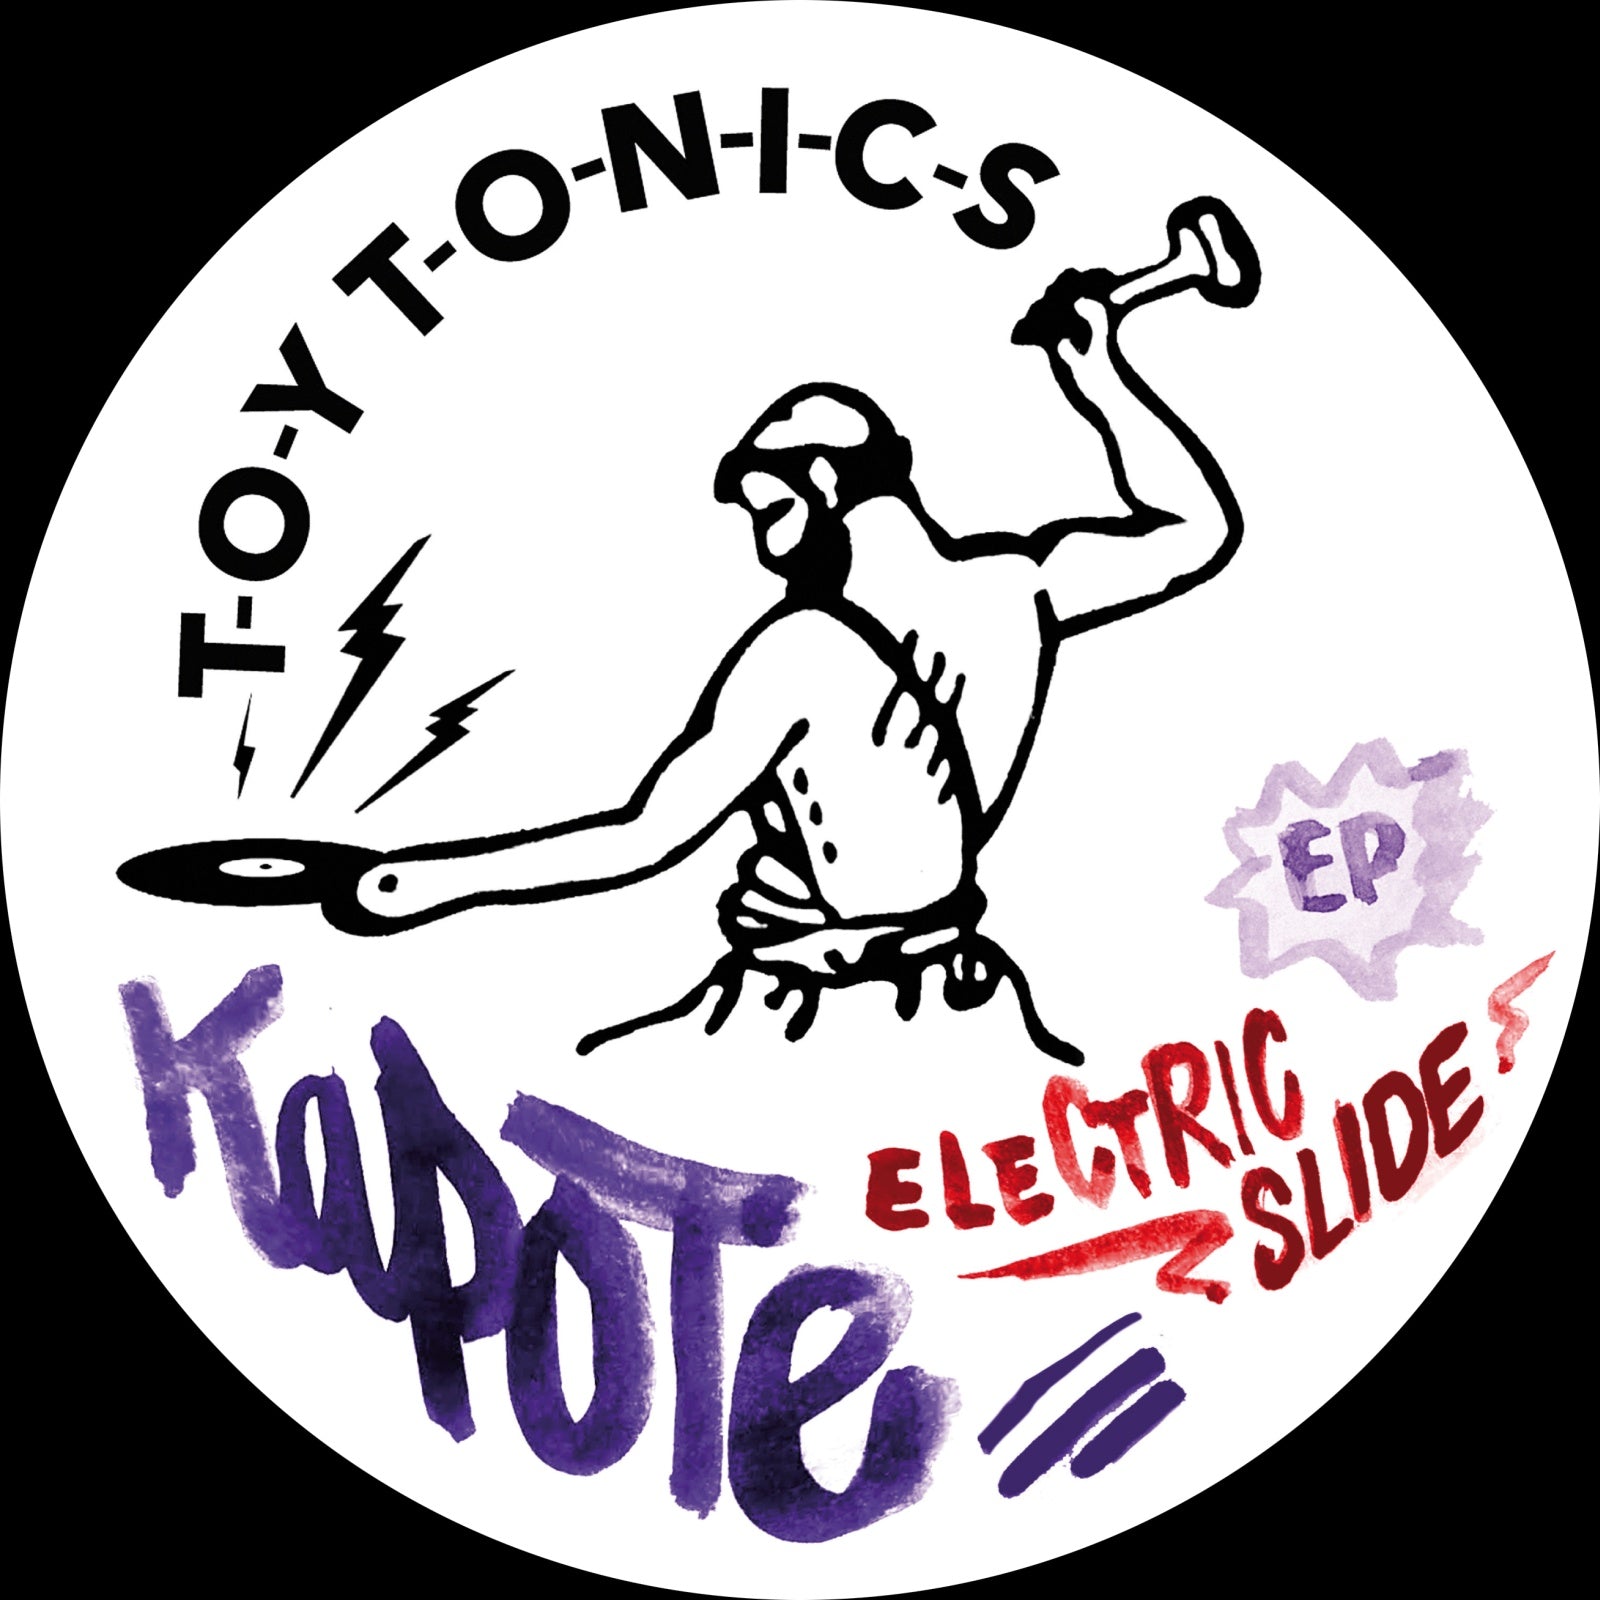 Kapote – Electric Slide EP